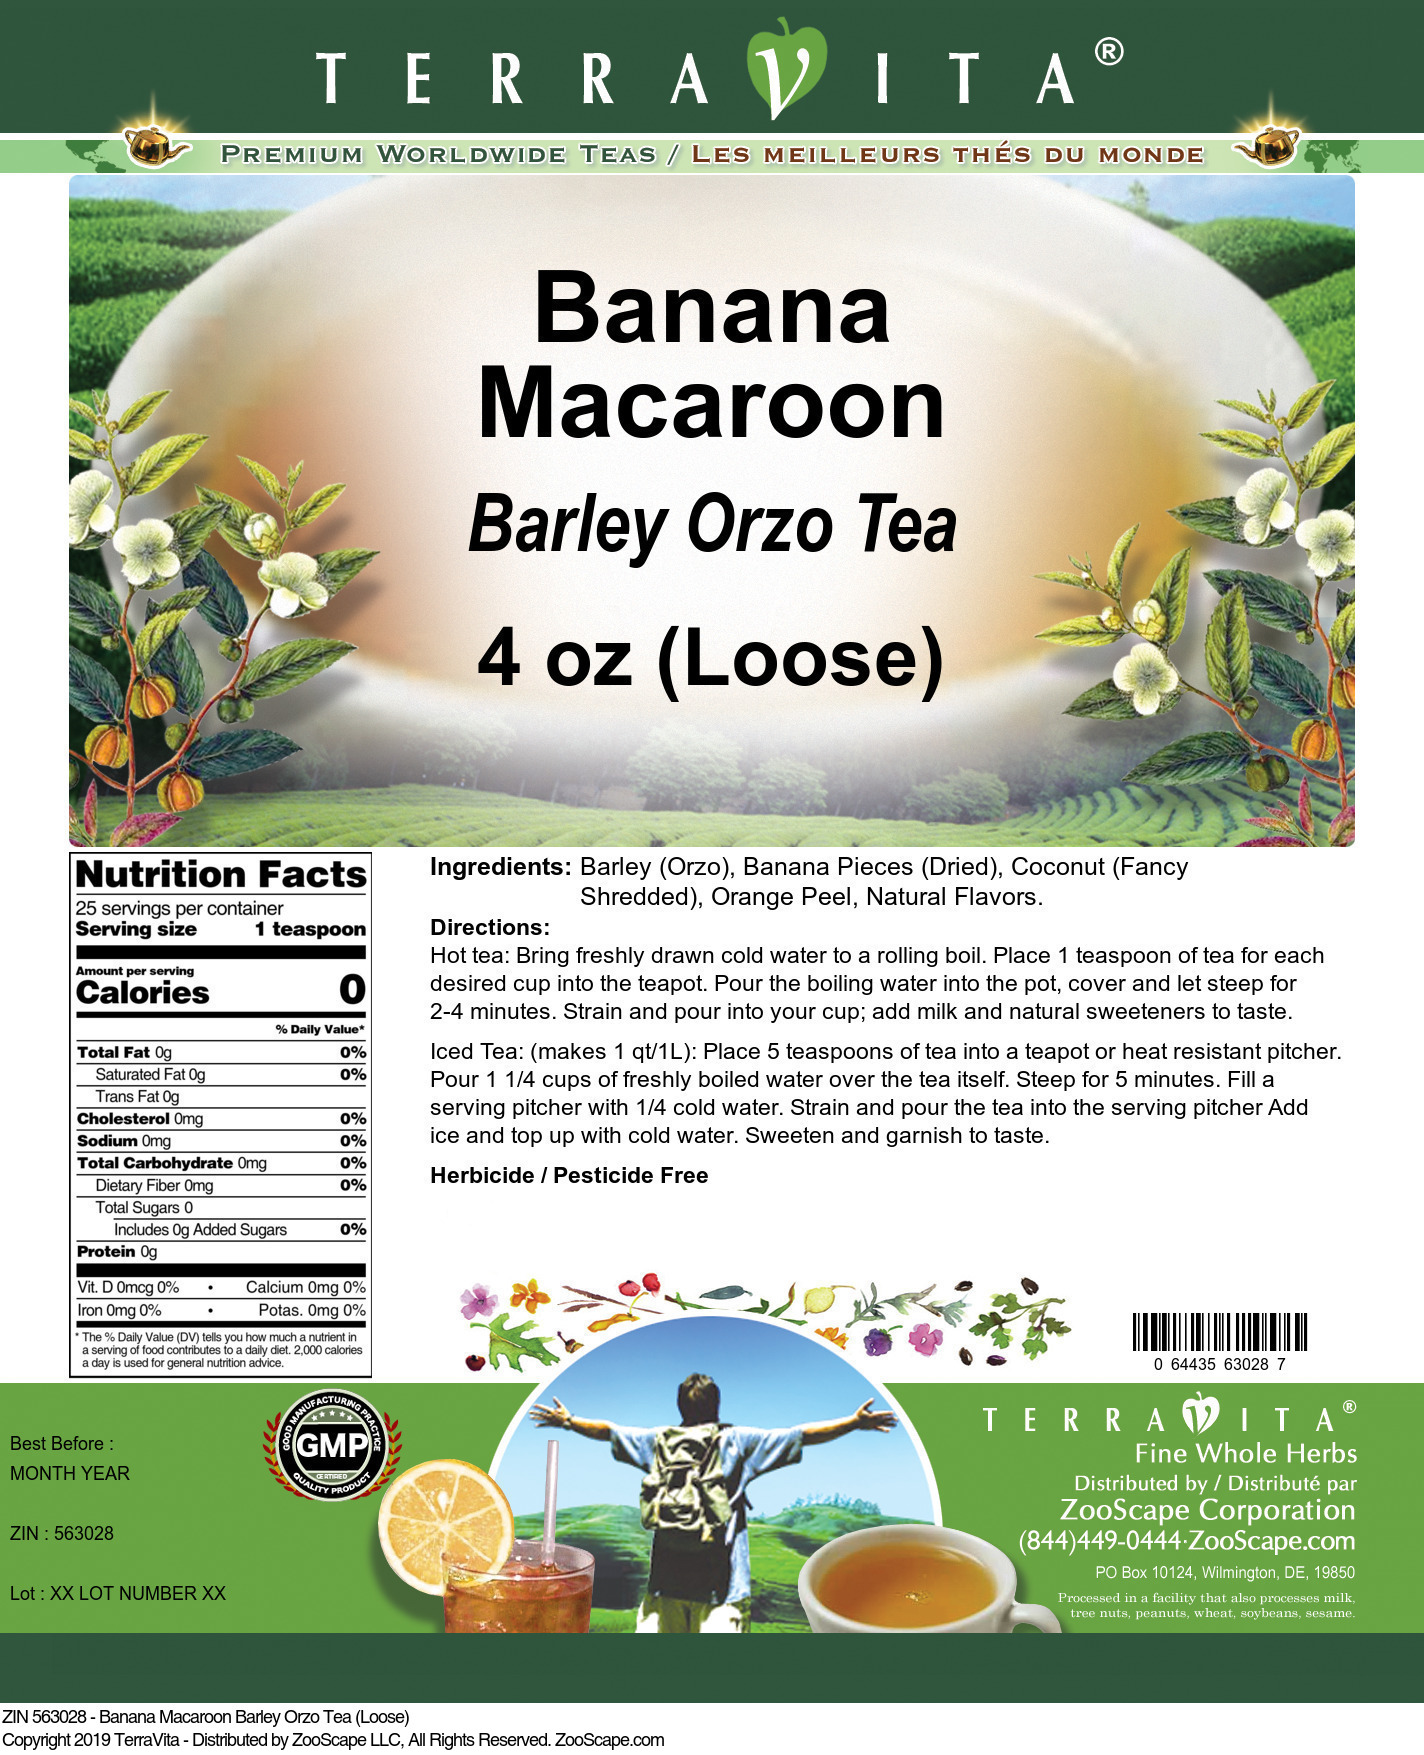 Banana Macaroon Barley Orzo Tea (Loose) - Label